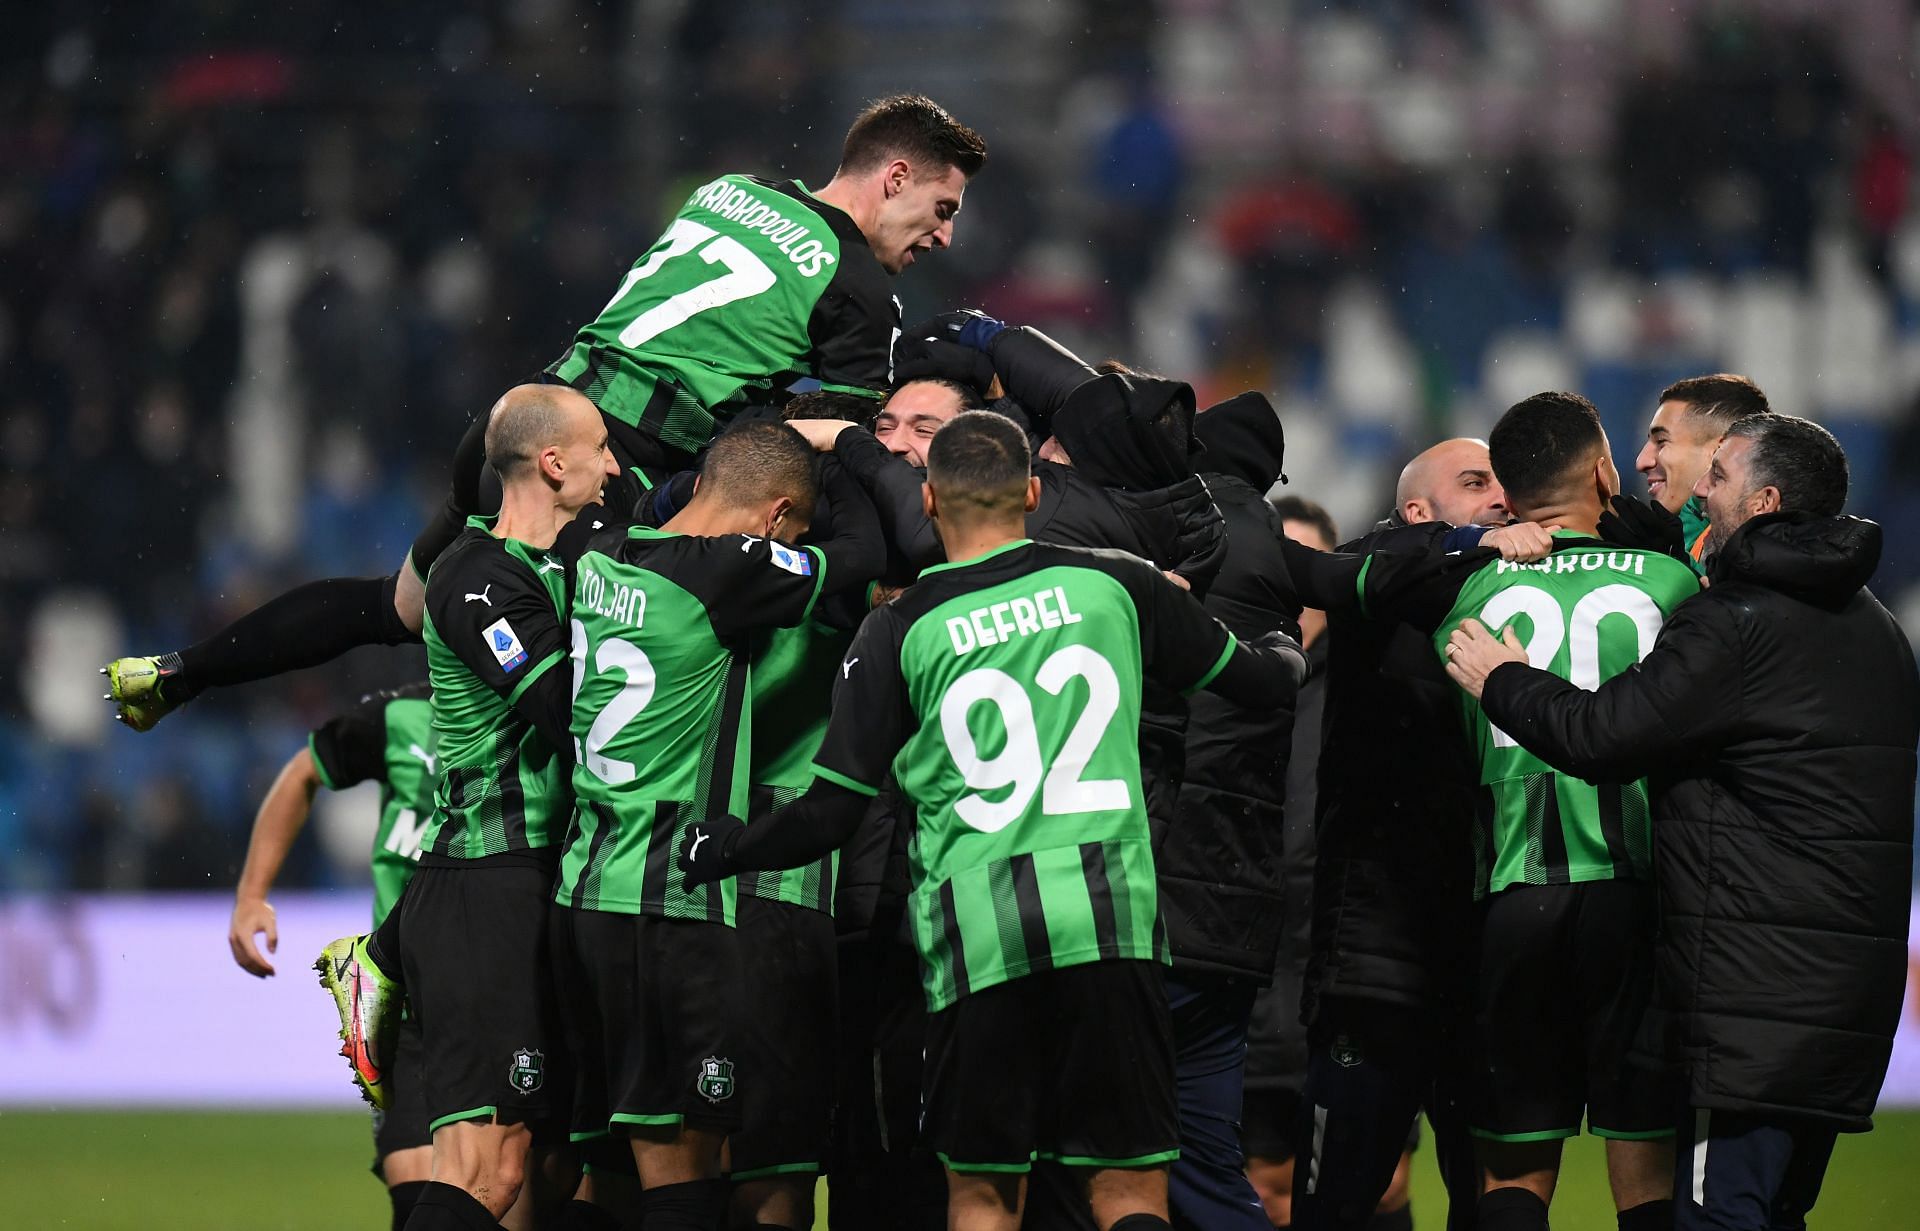 US Sassuolo will face Spezia on Sumday - Serie A